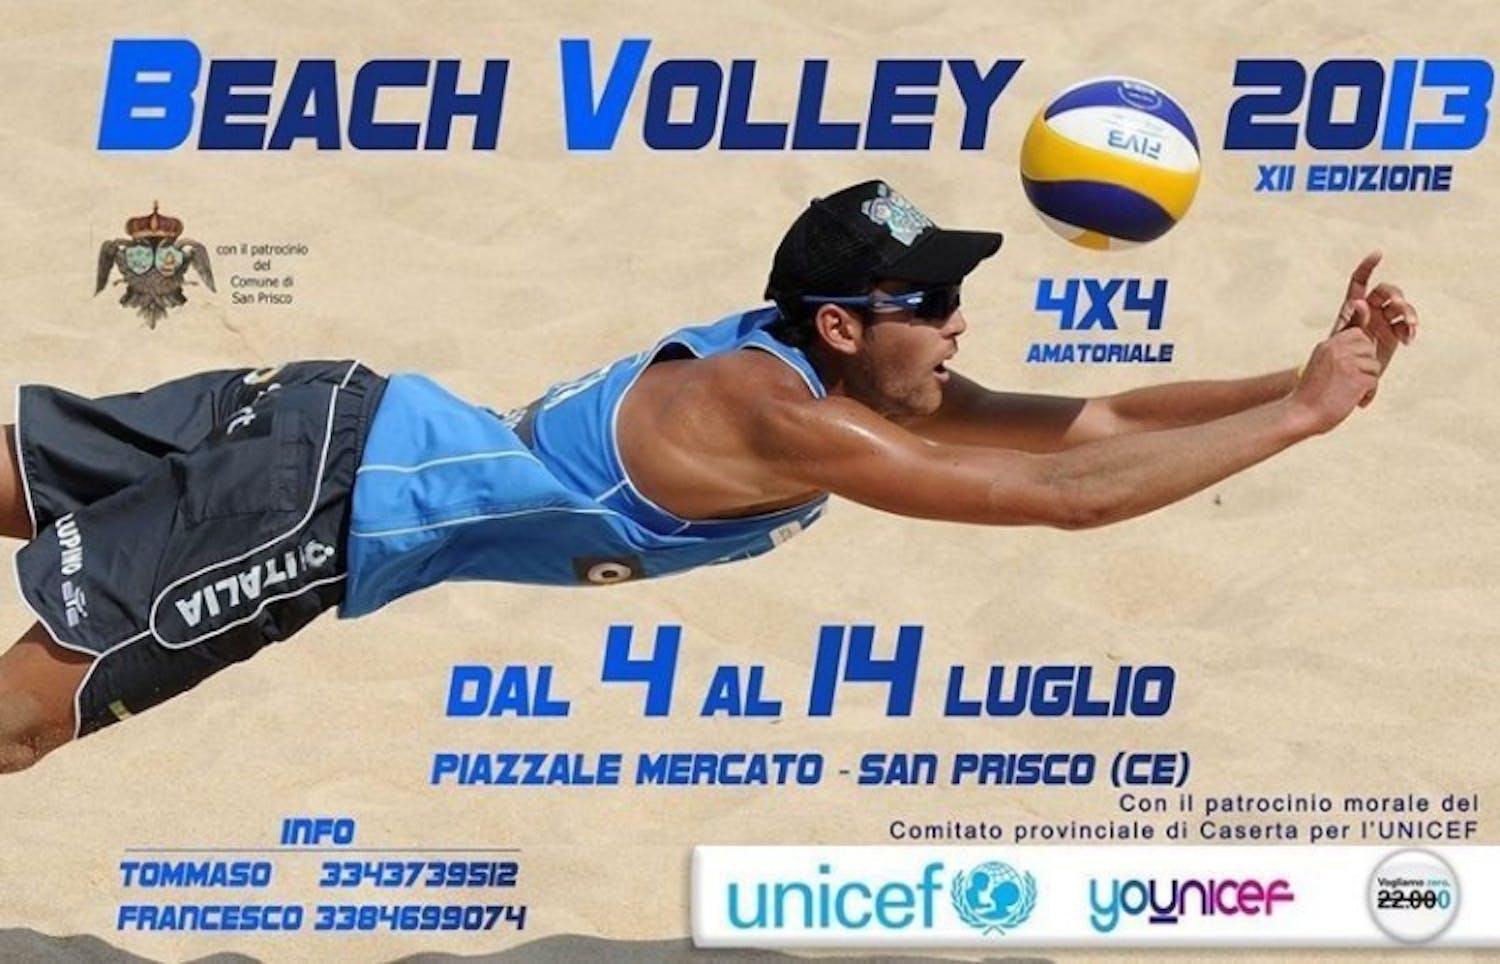 Beach volley per l'UNICEF a San Prisco (CE)